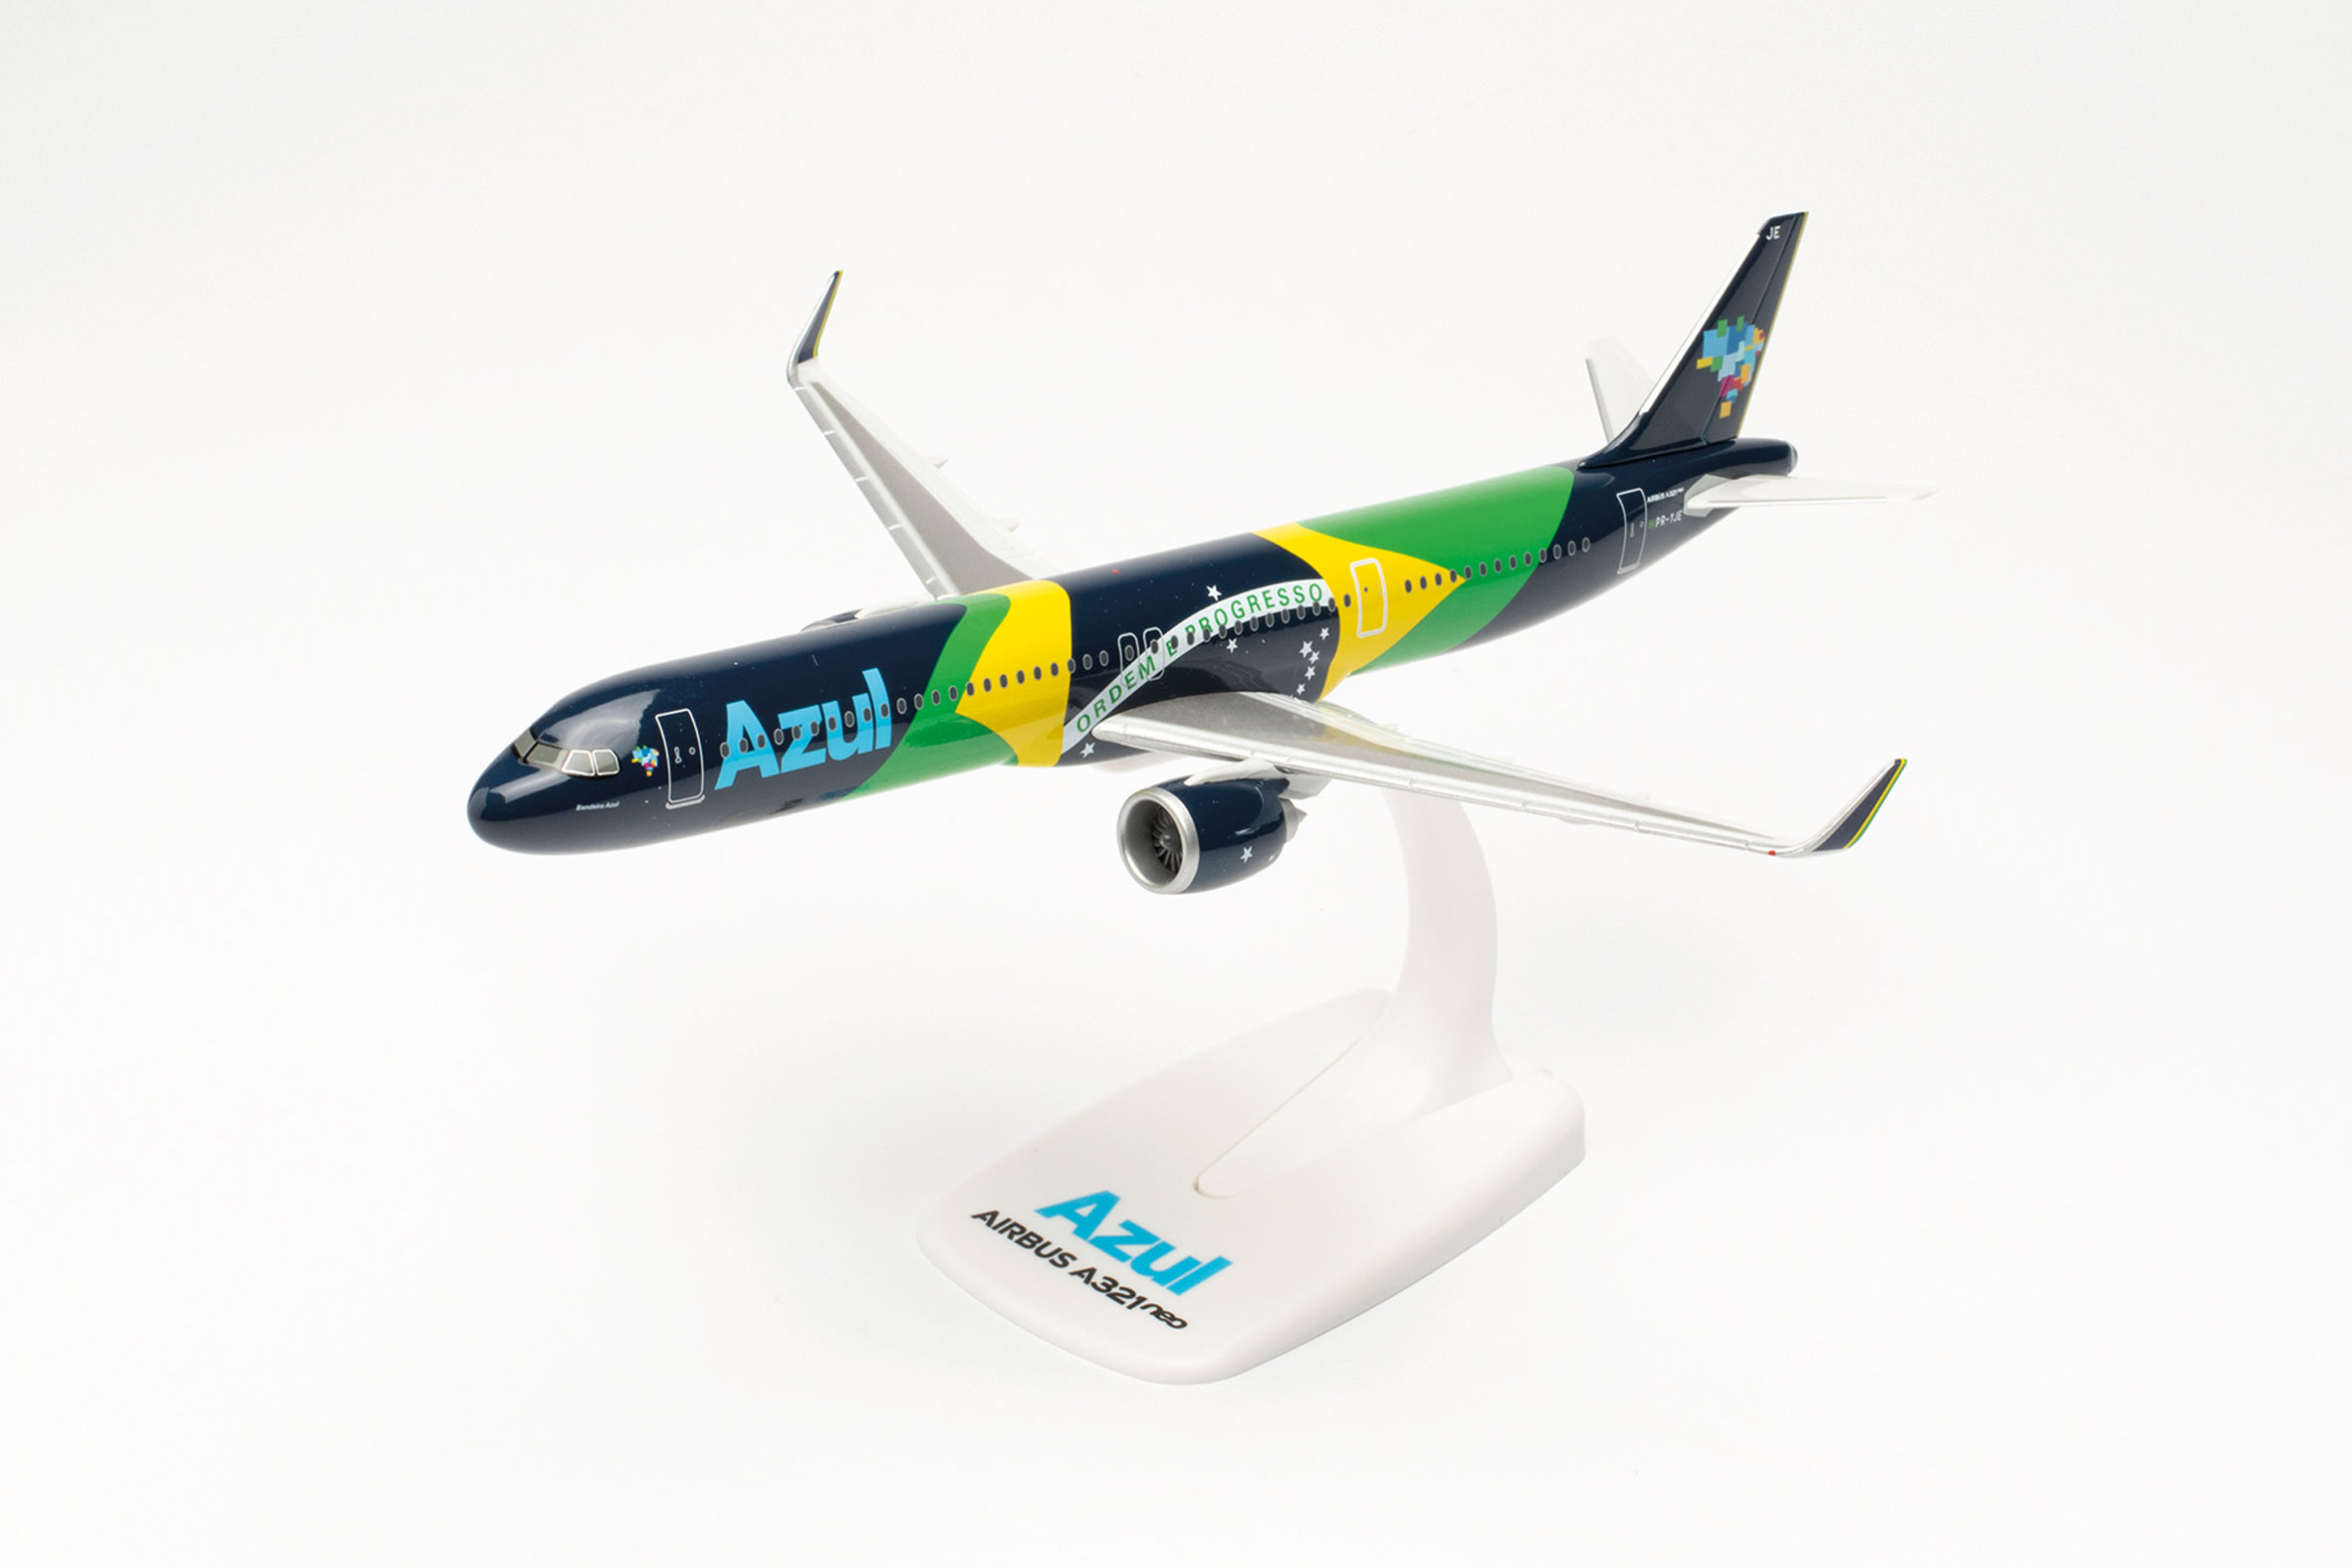 Azul Brazilian Airlines Airbus A321neo “Brazilian Flag livery” – Reg.: PR-YJE